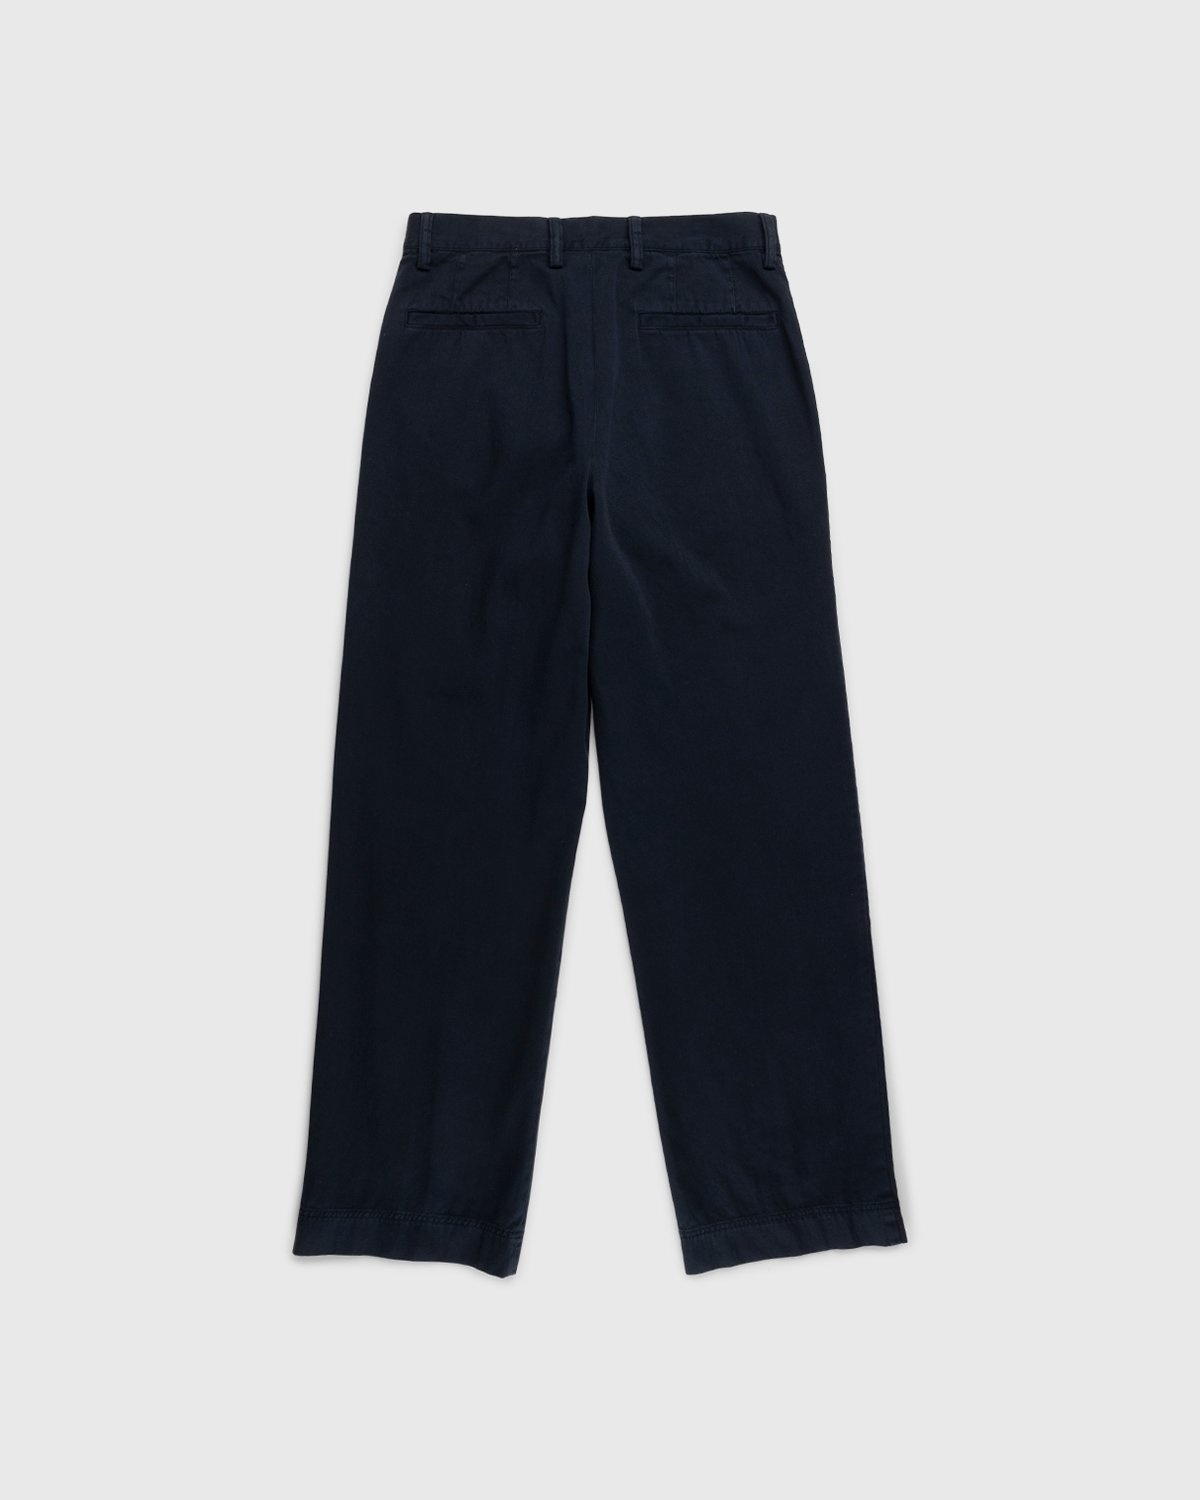 Dries van Noten – Pilson Pants Navy - Trousers - Blue - Image 2